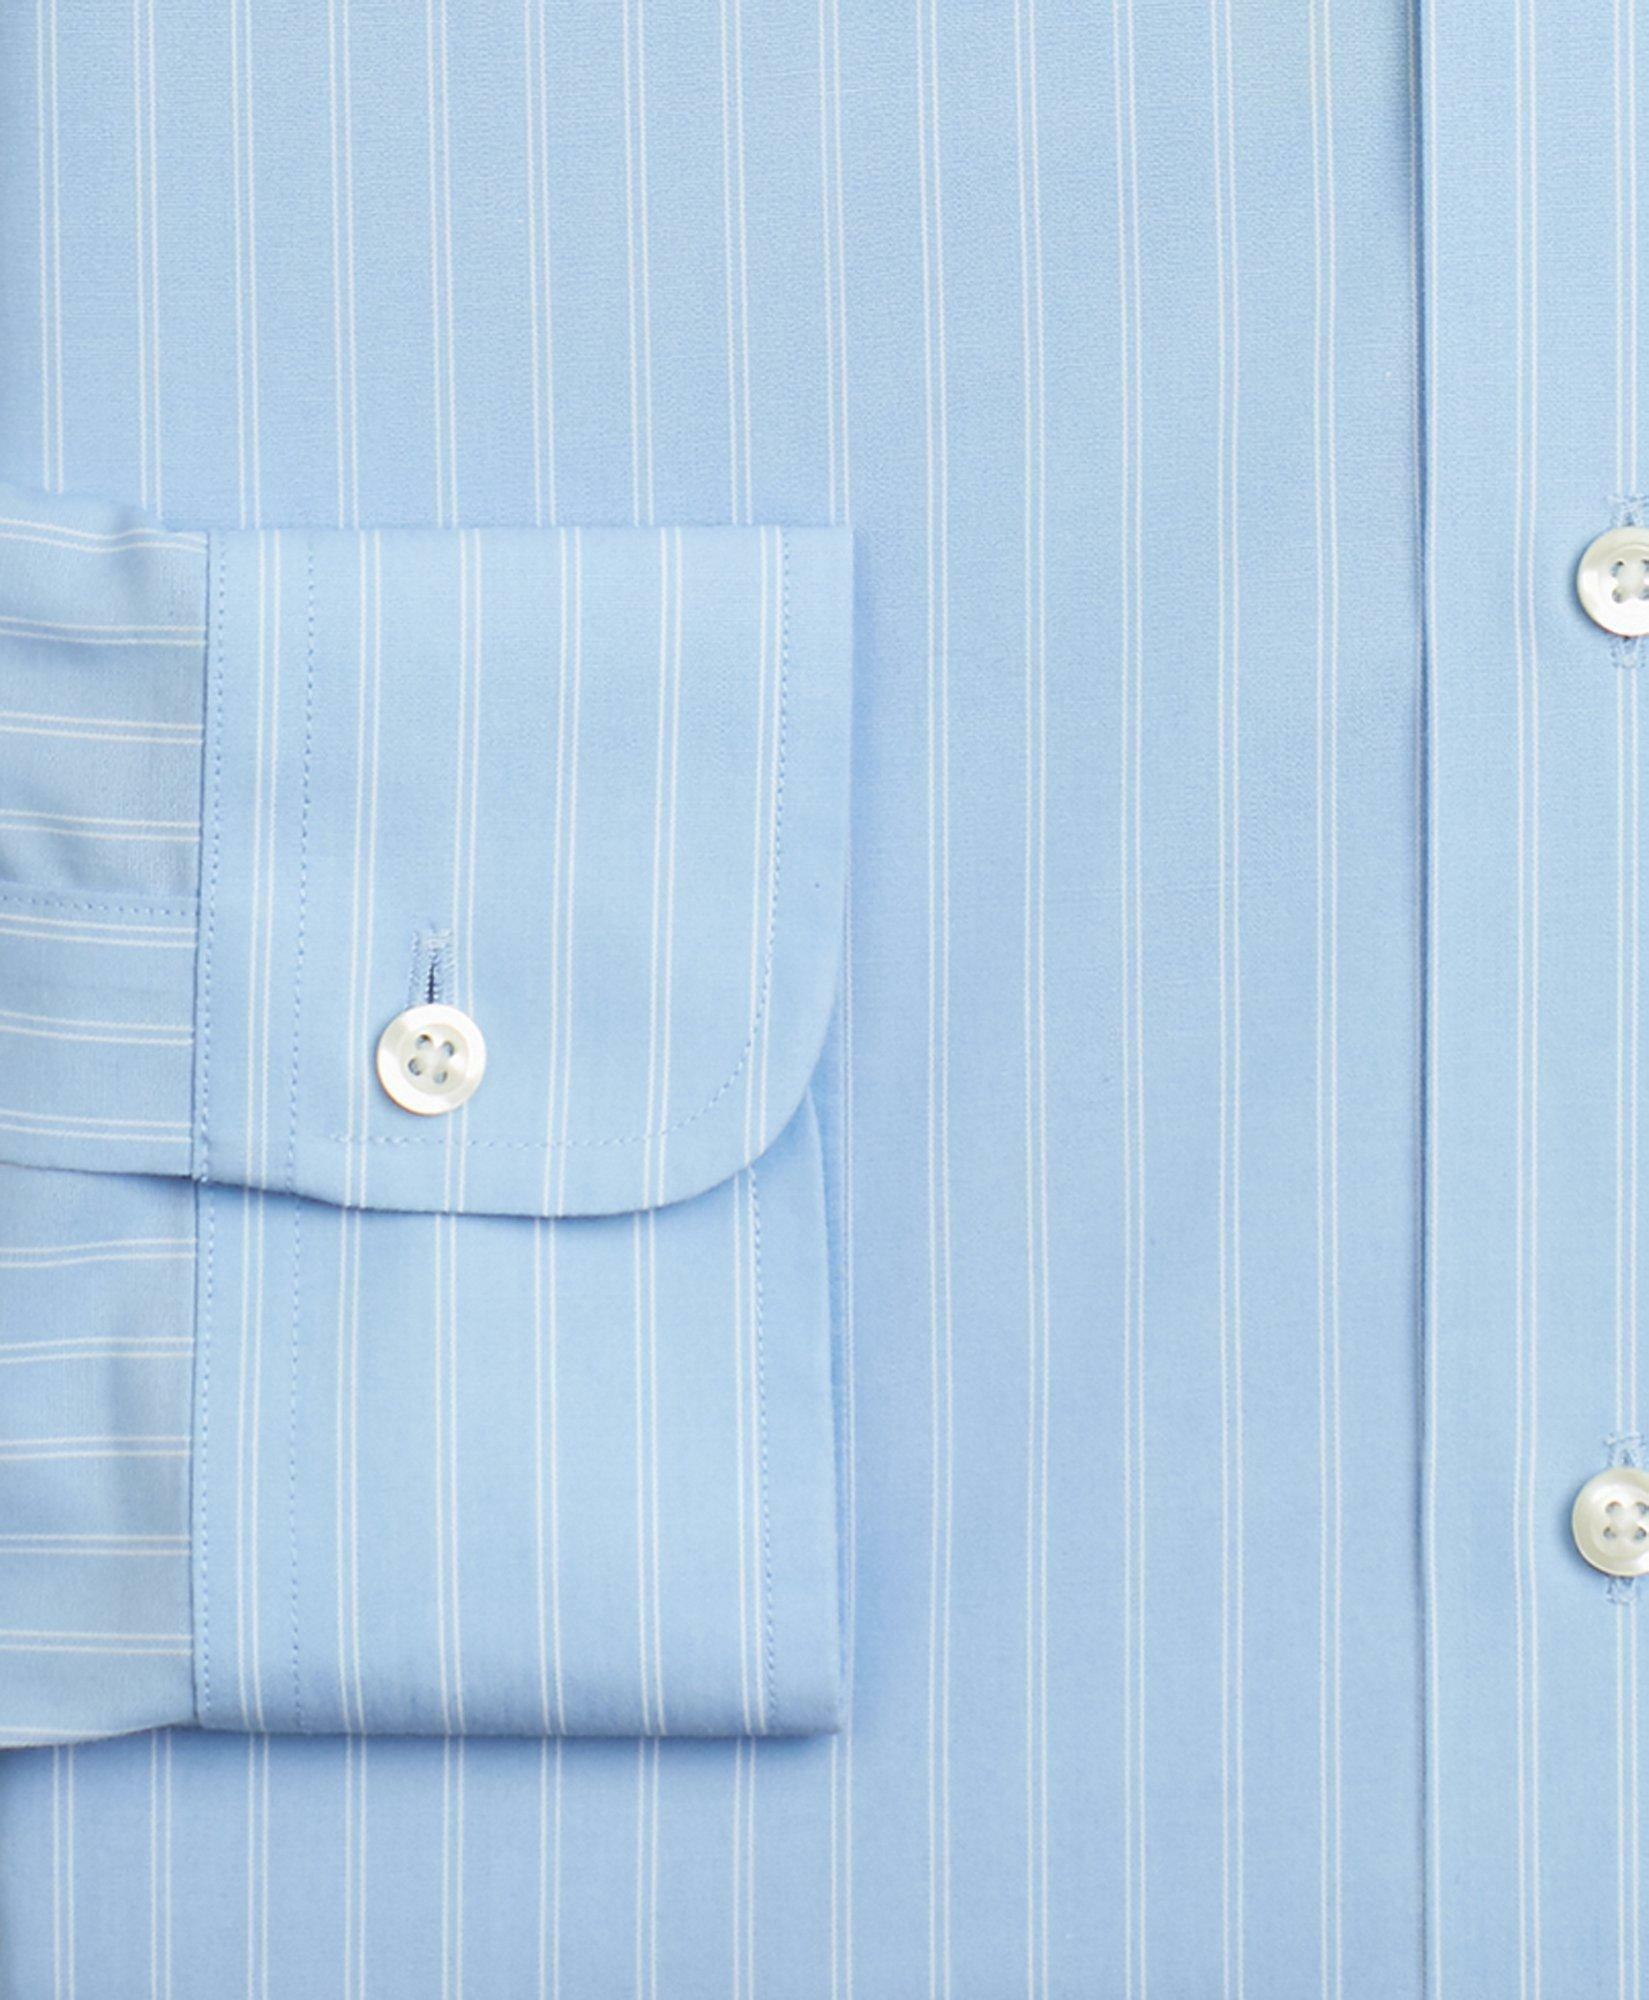 Brooks Brothers Men's Regent Regular-Fit Dress Shirt, Non-Iron Double-Stripe | Blue